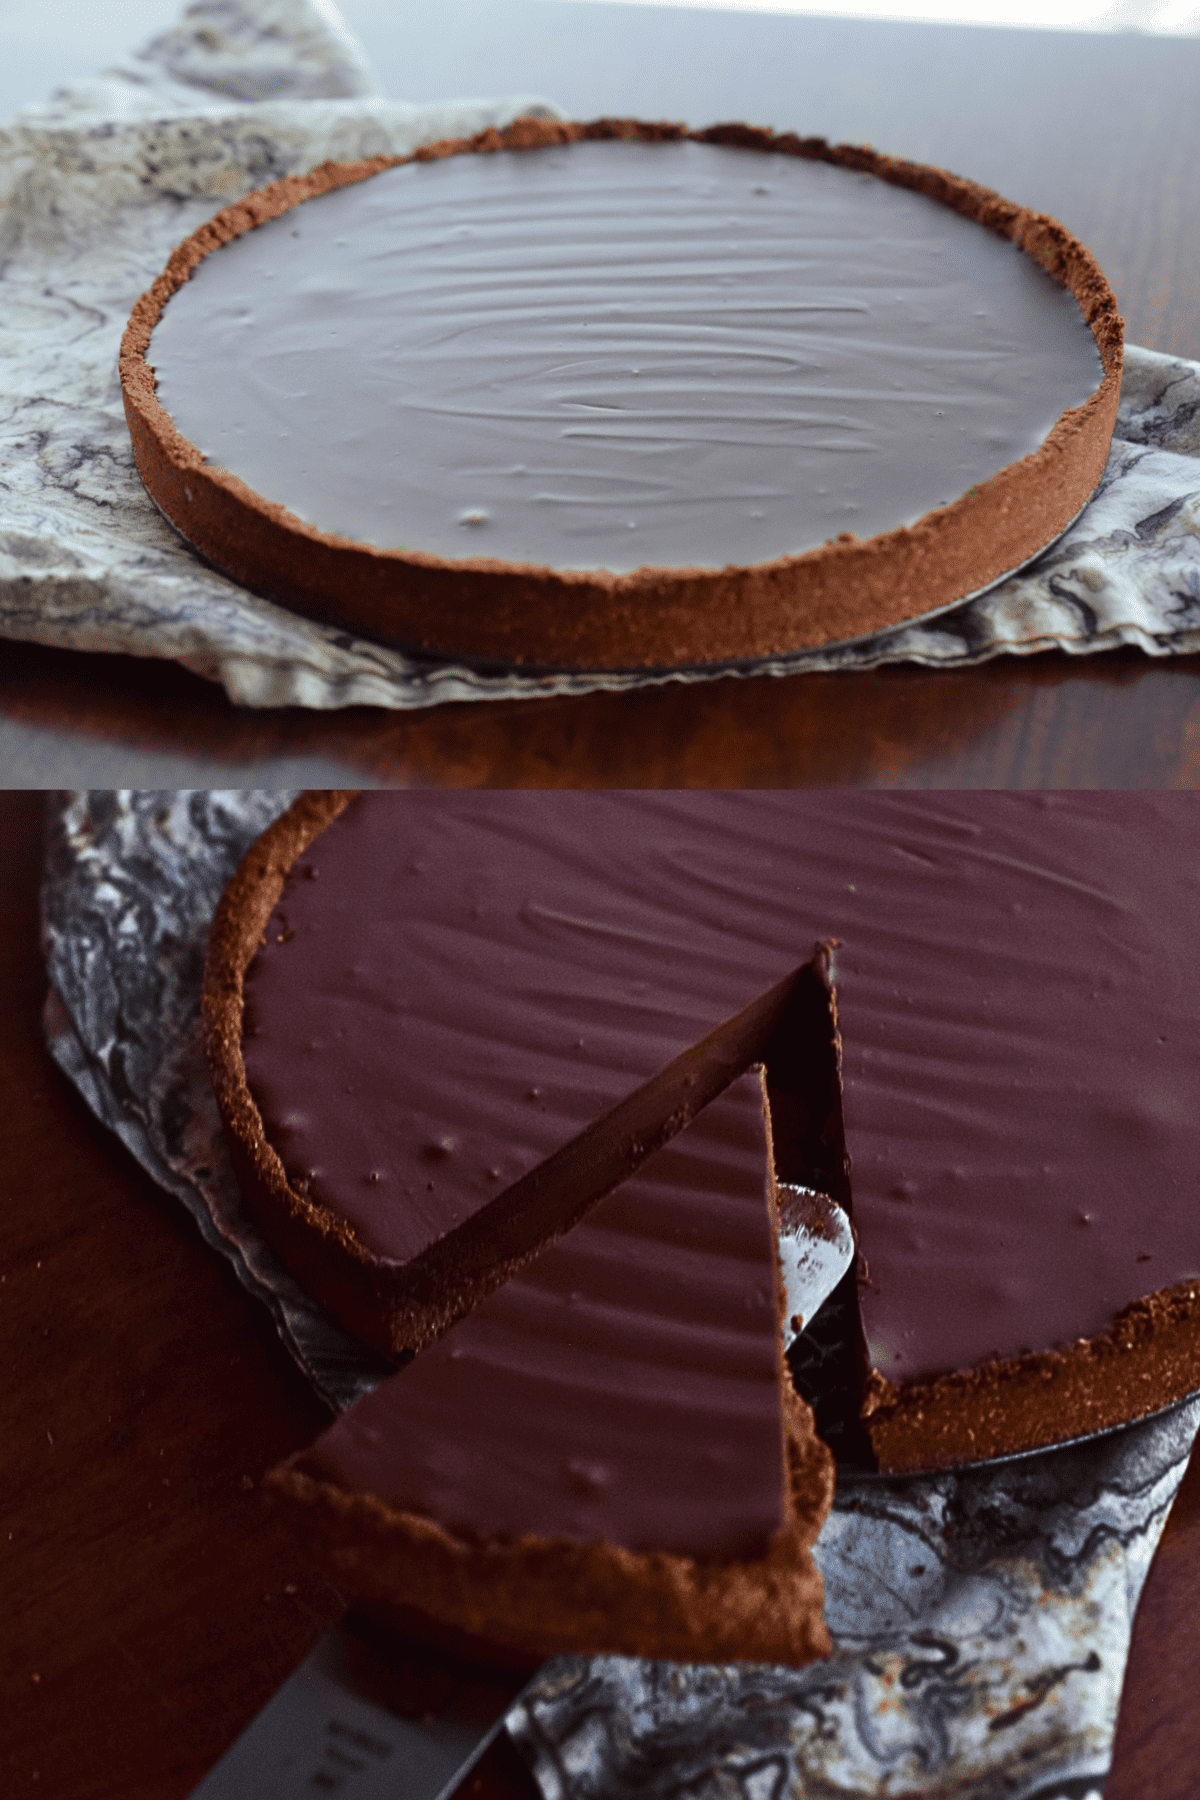 paleo vegan chocolate tart on a table with a cloth